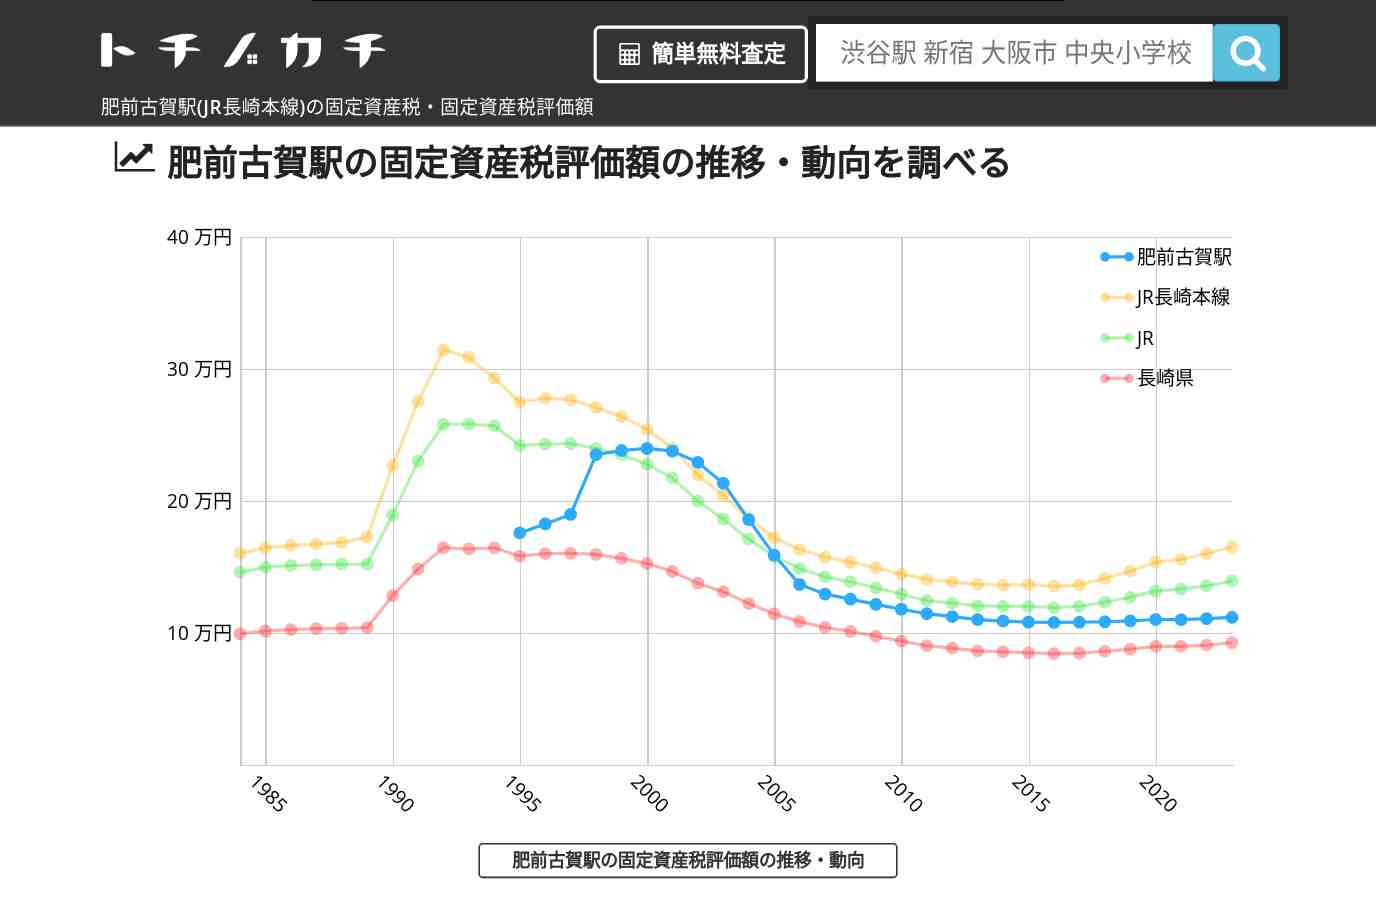 肥前古賀駅(JR長崎本線)の固定資産税・固定資産税評価額 | トチノカチ